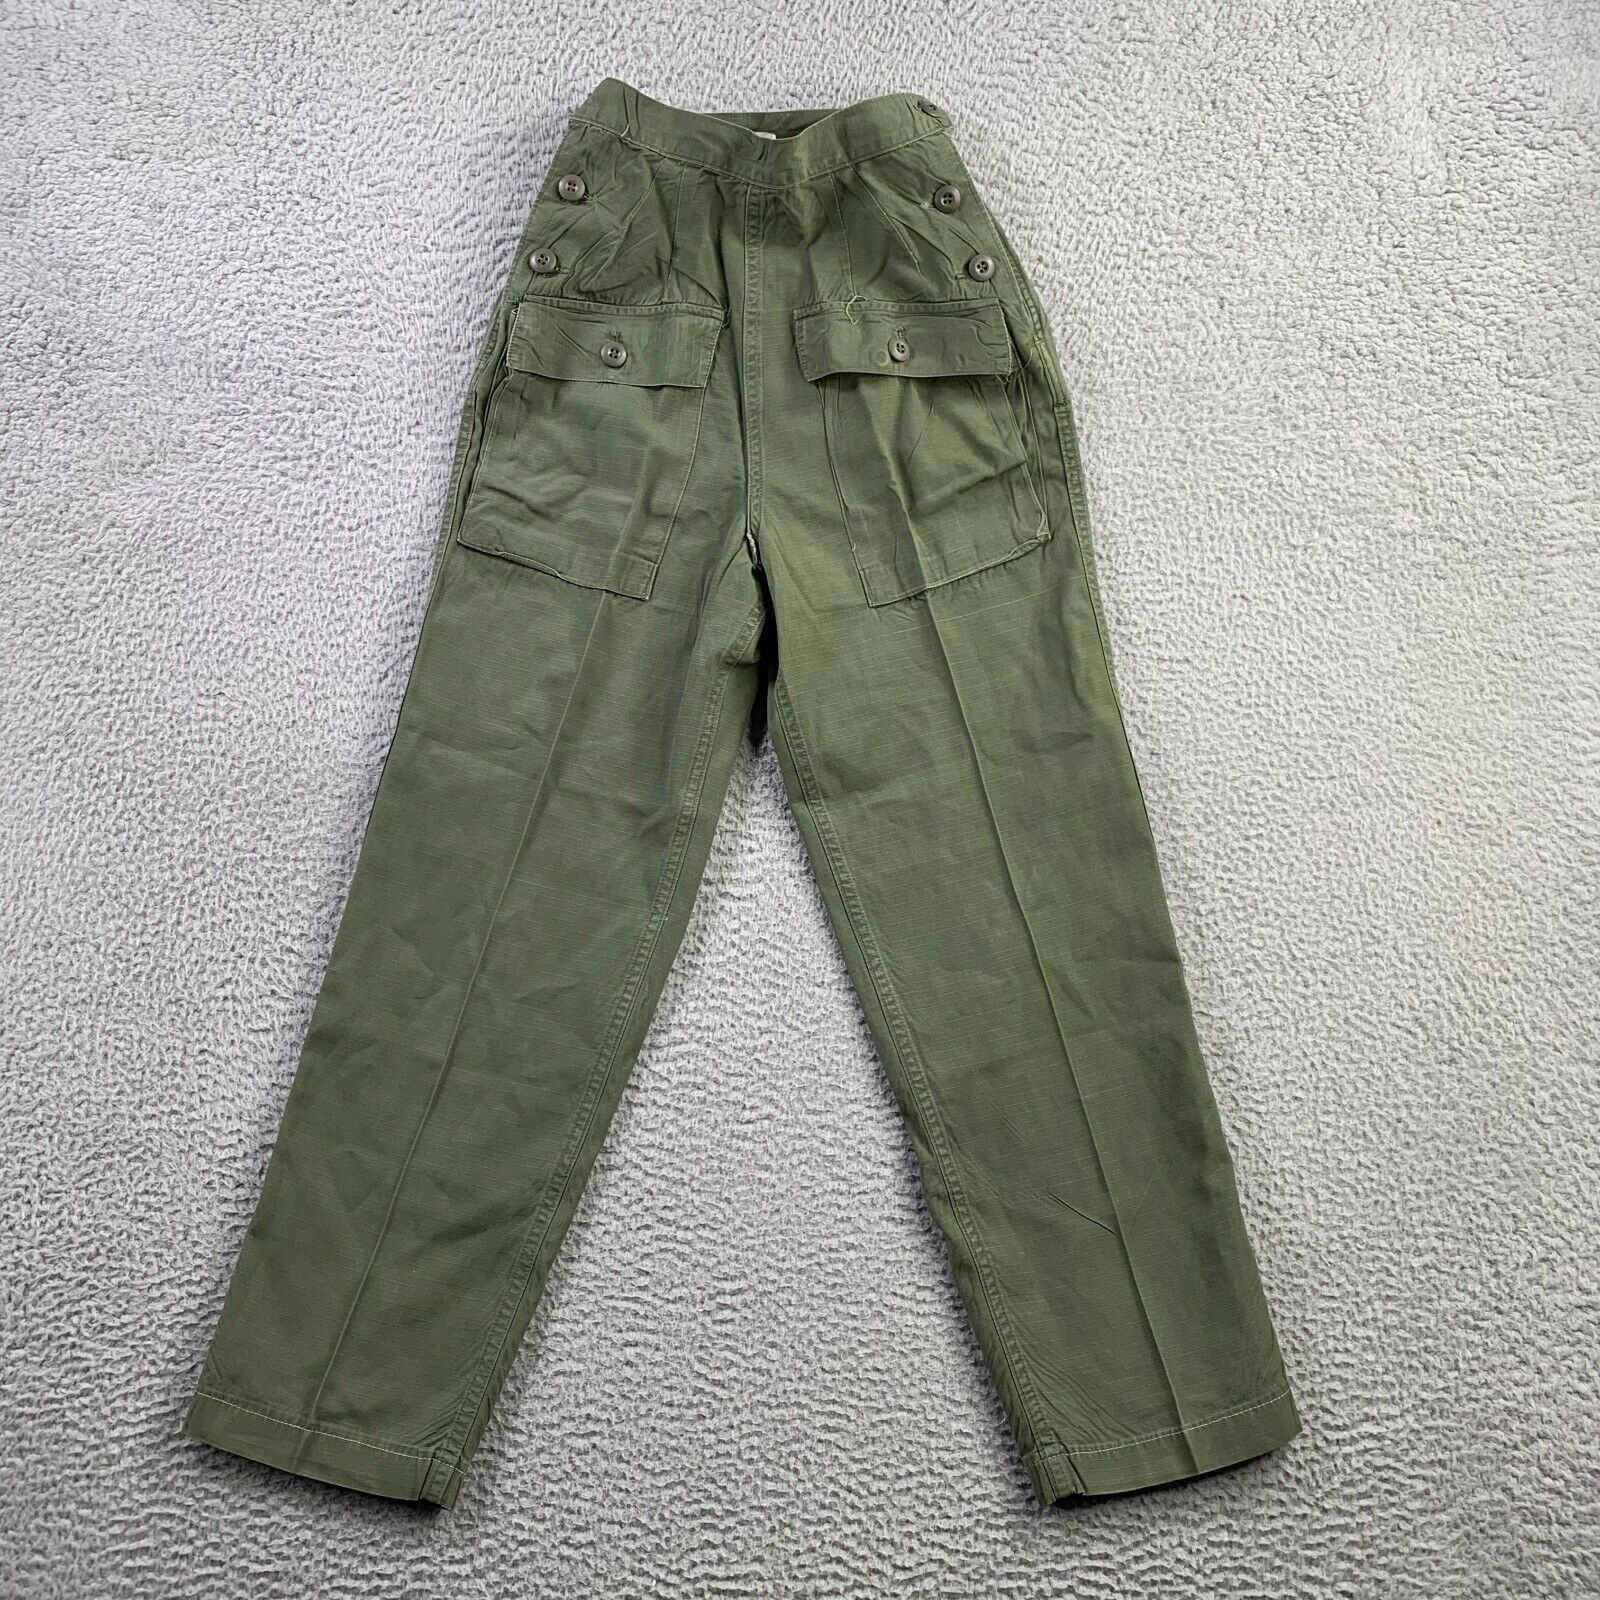 Vintage Military Pants Womens 8 (Fits 22x24) OG 107 Slacks 60s Vietnam Era 1966